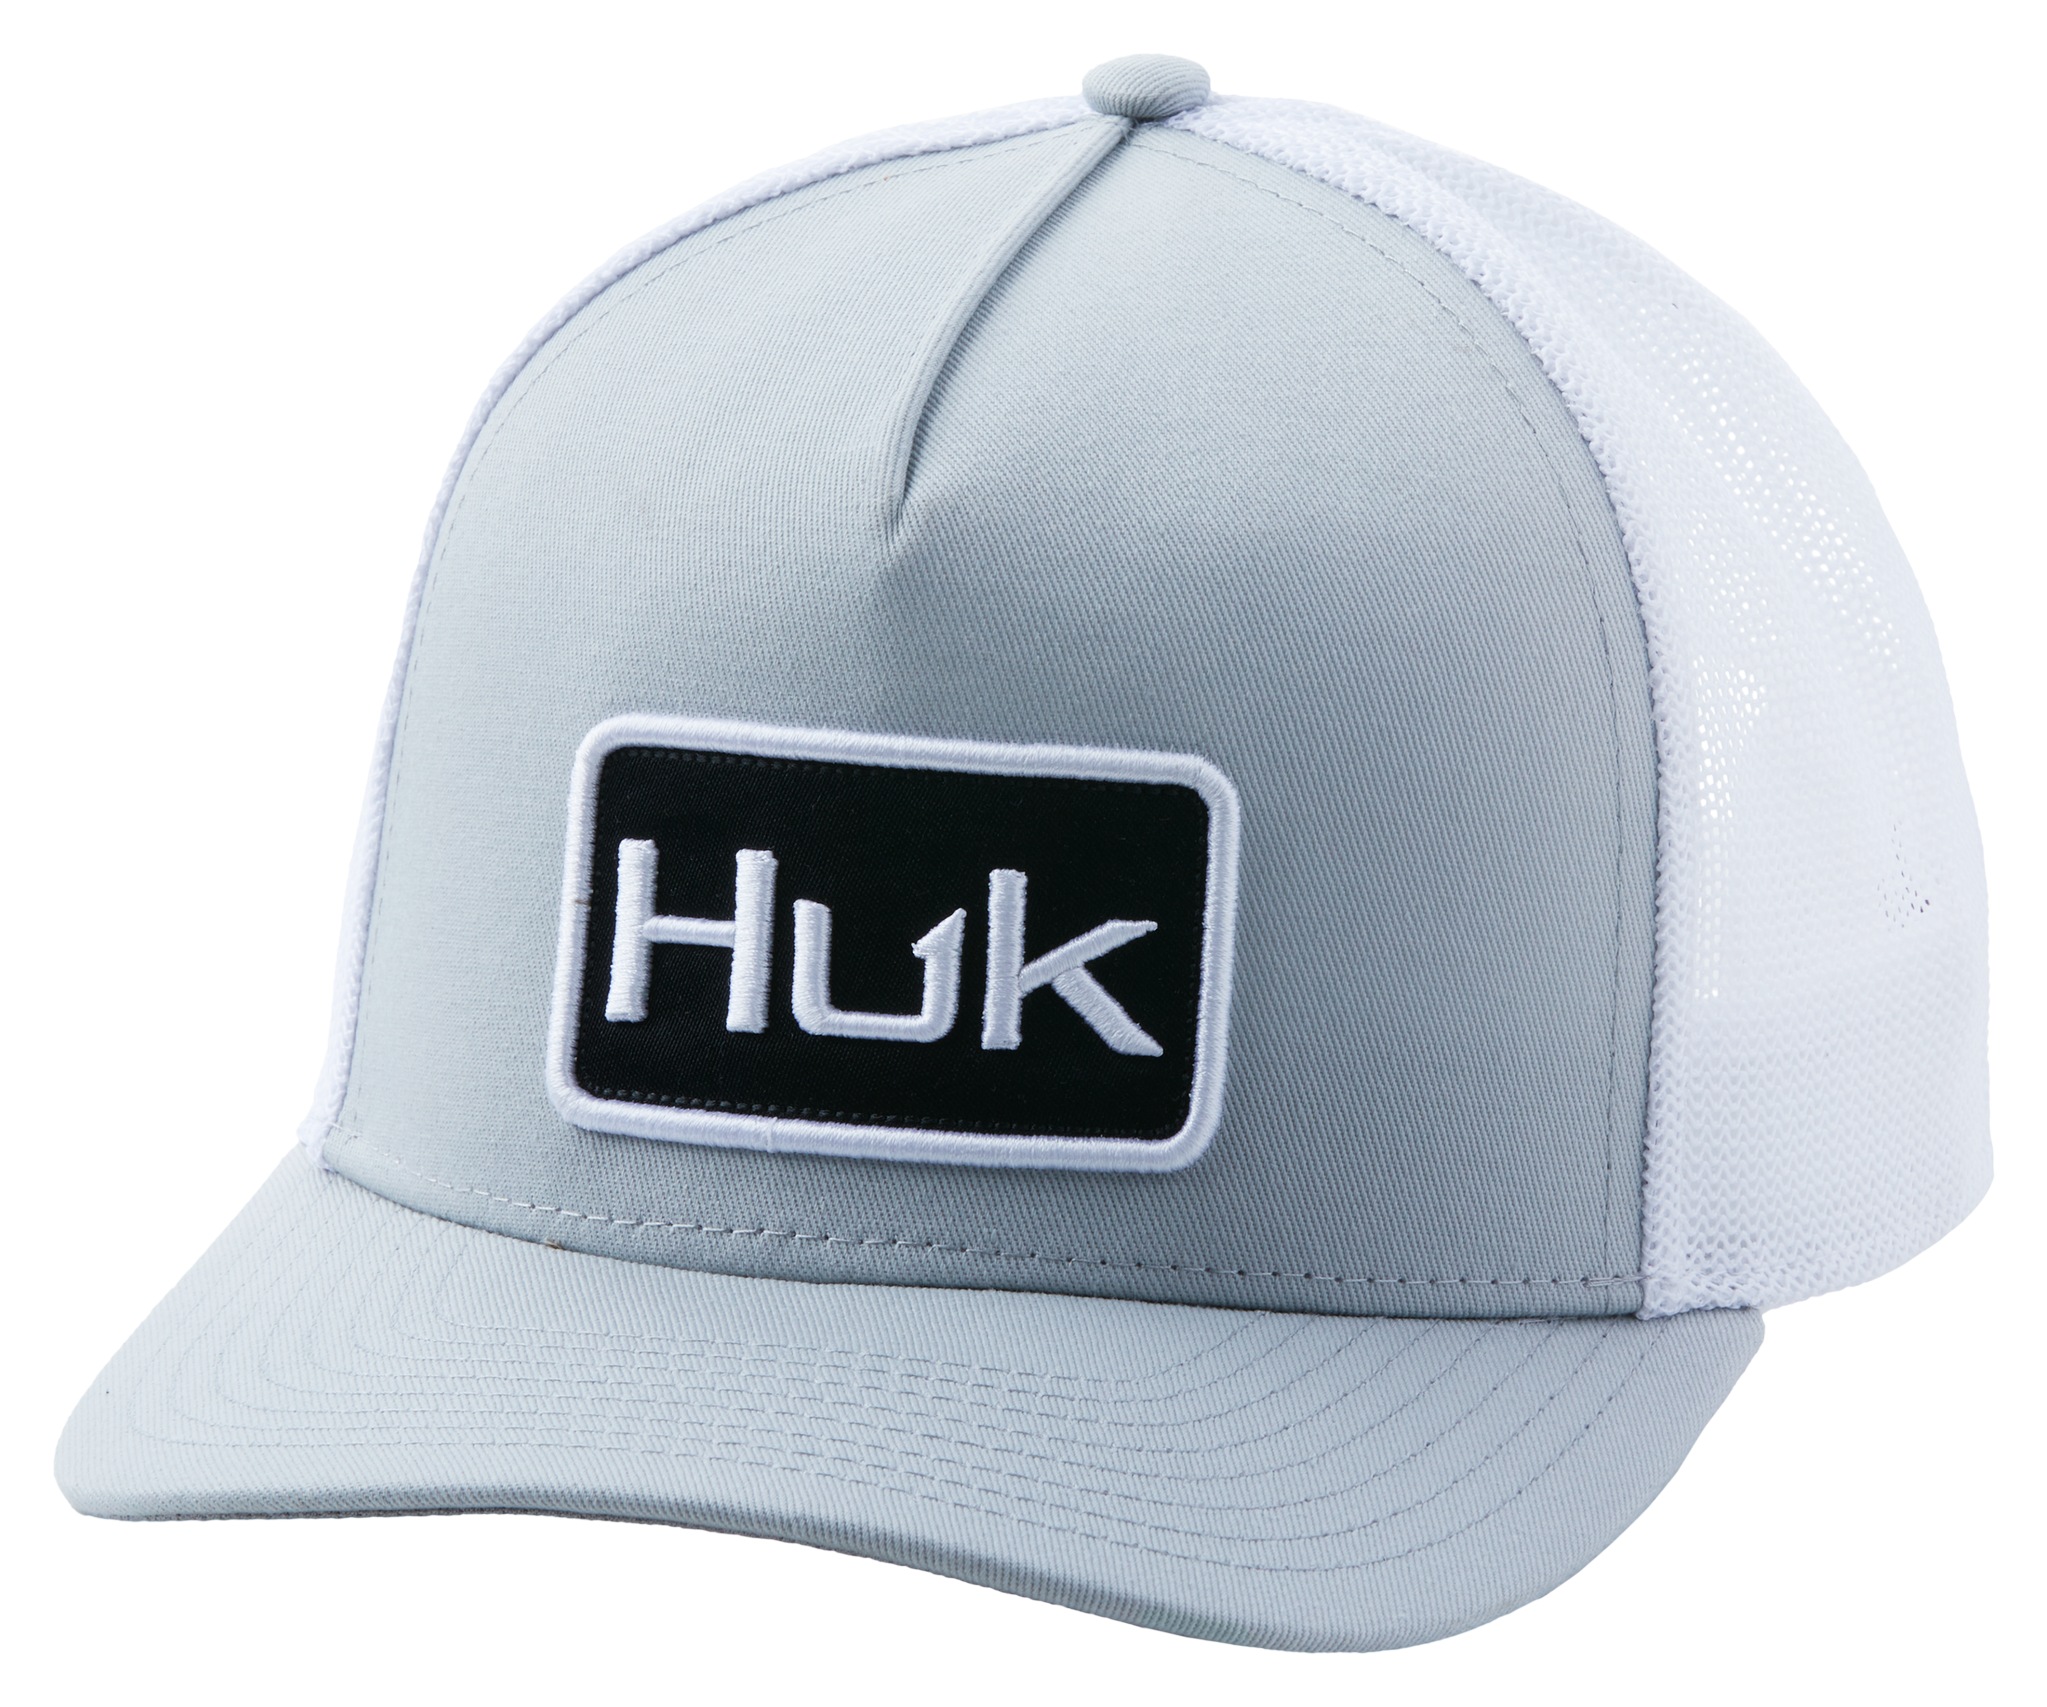 Huk, Accessories, Huk Fishing Mesh Snapback Trucker Hat White Teal Logo  Adjustable Mens